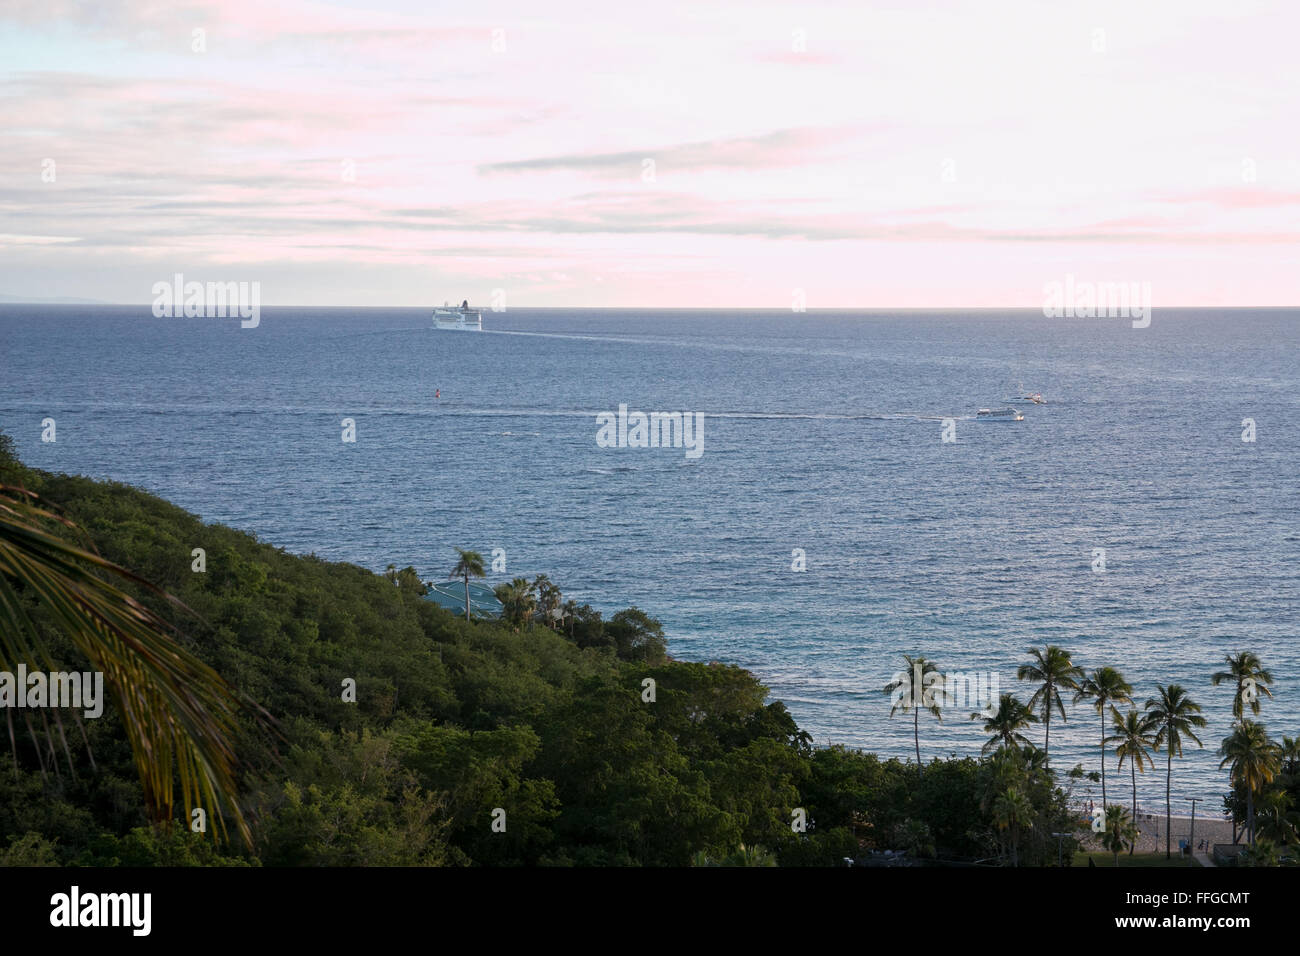 Boats on the horizon in St. Thomas, U.S. Virgin Islands. Stock Photo